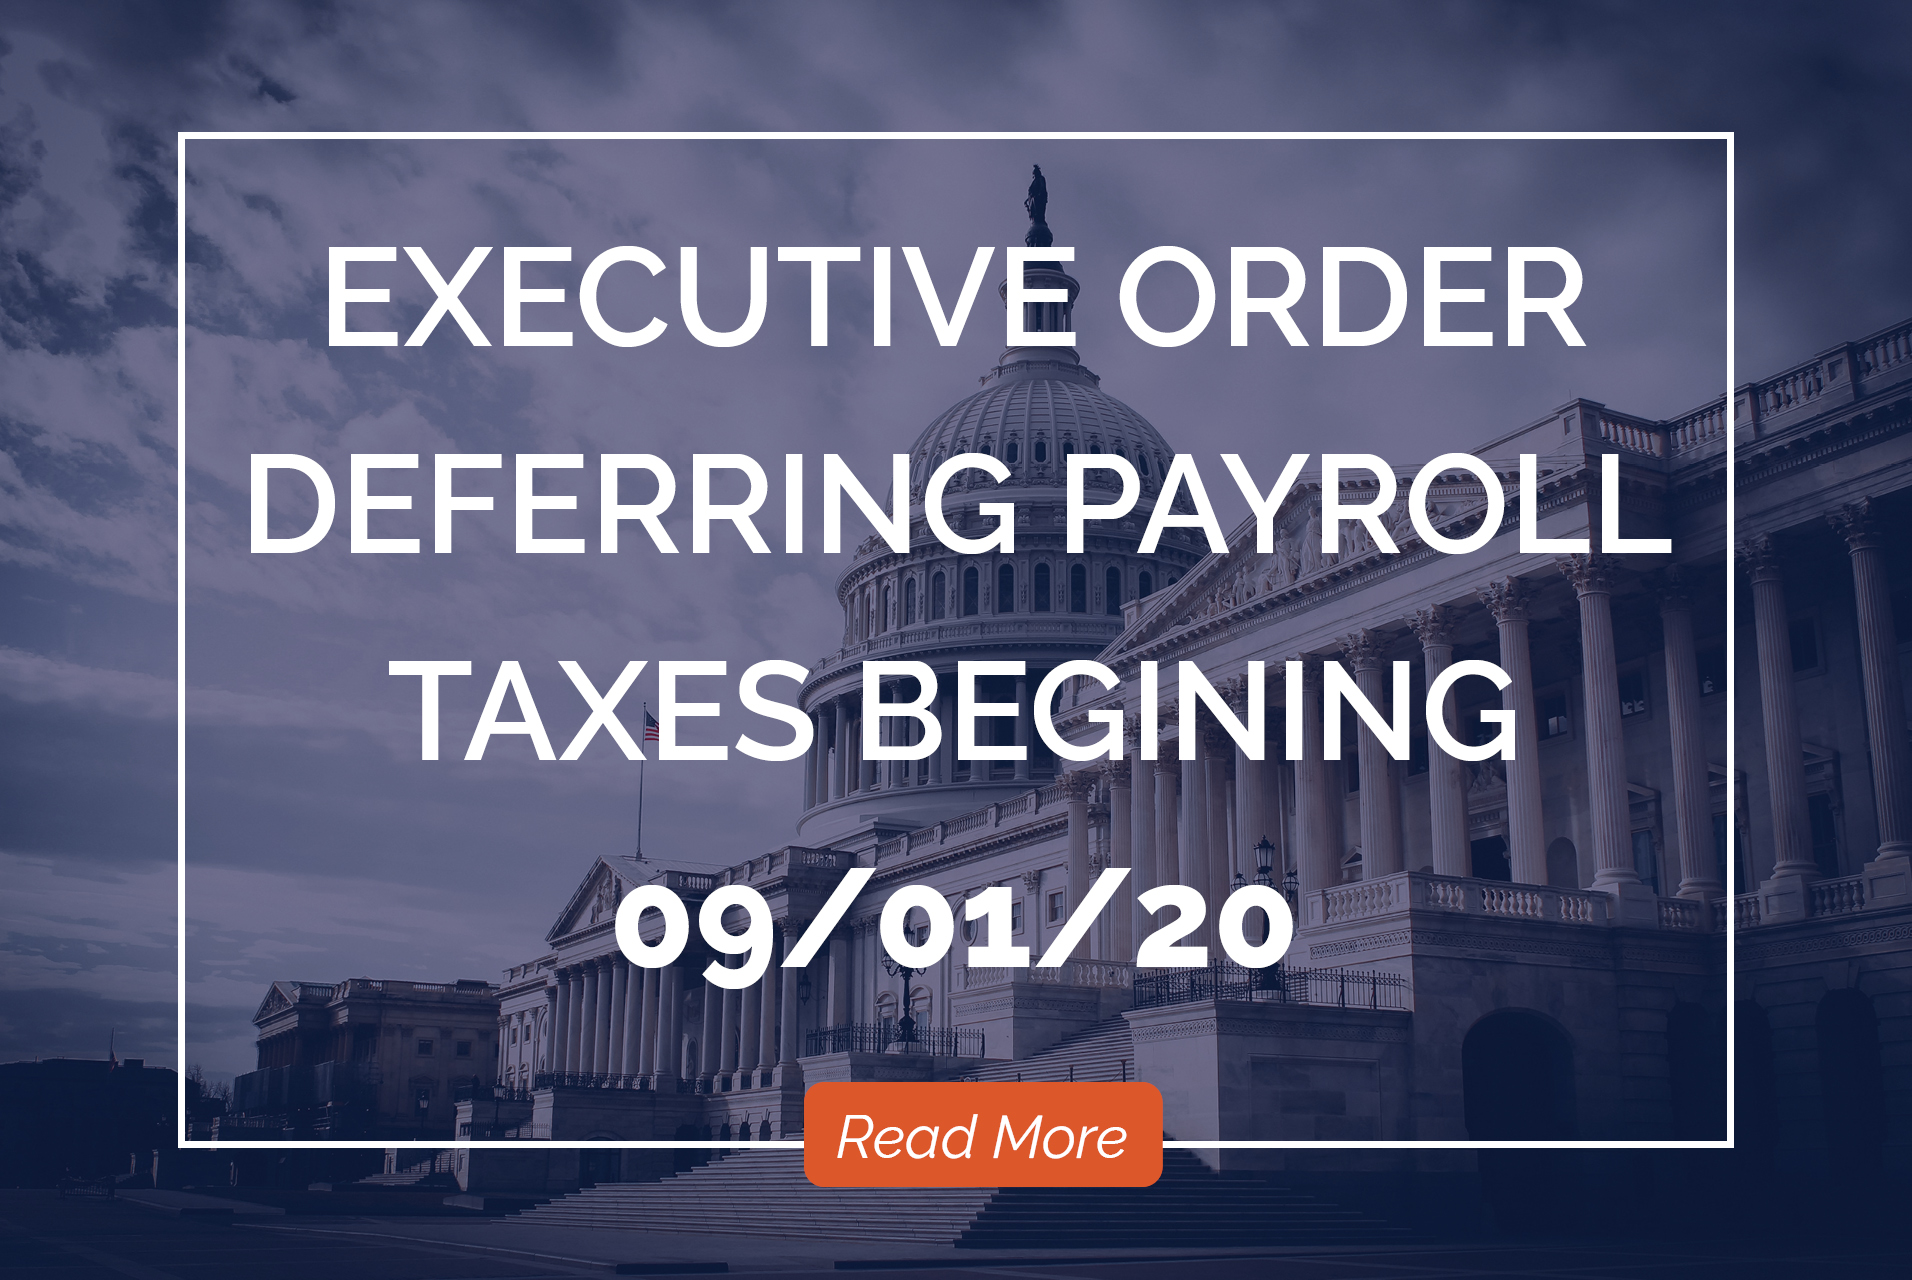 Payroll Tax Deferral Executive Order